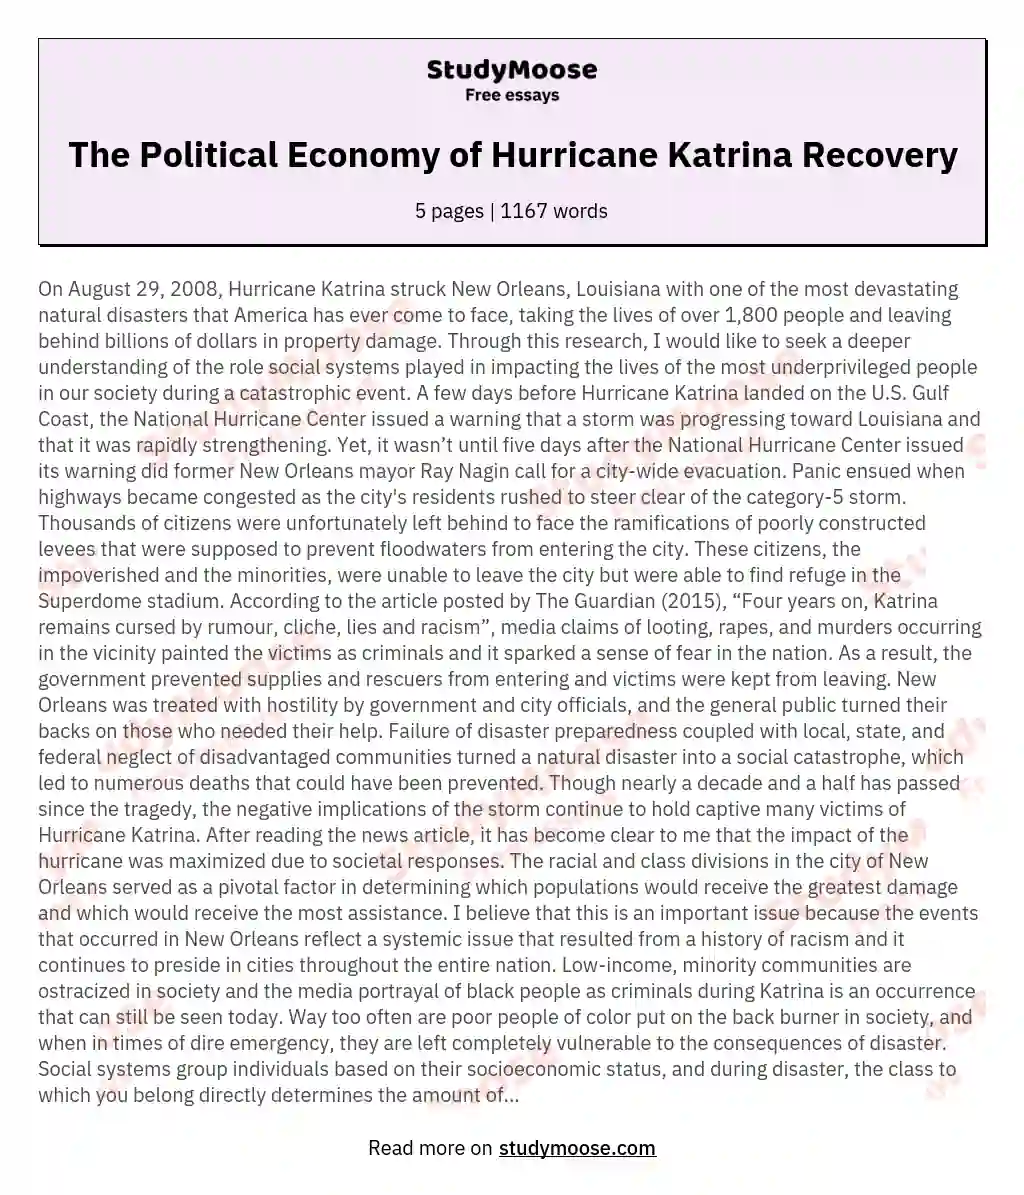 The Political Economy of Hurricane Katrina Recovery